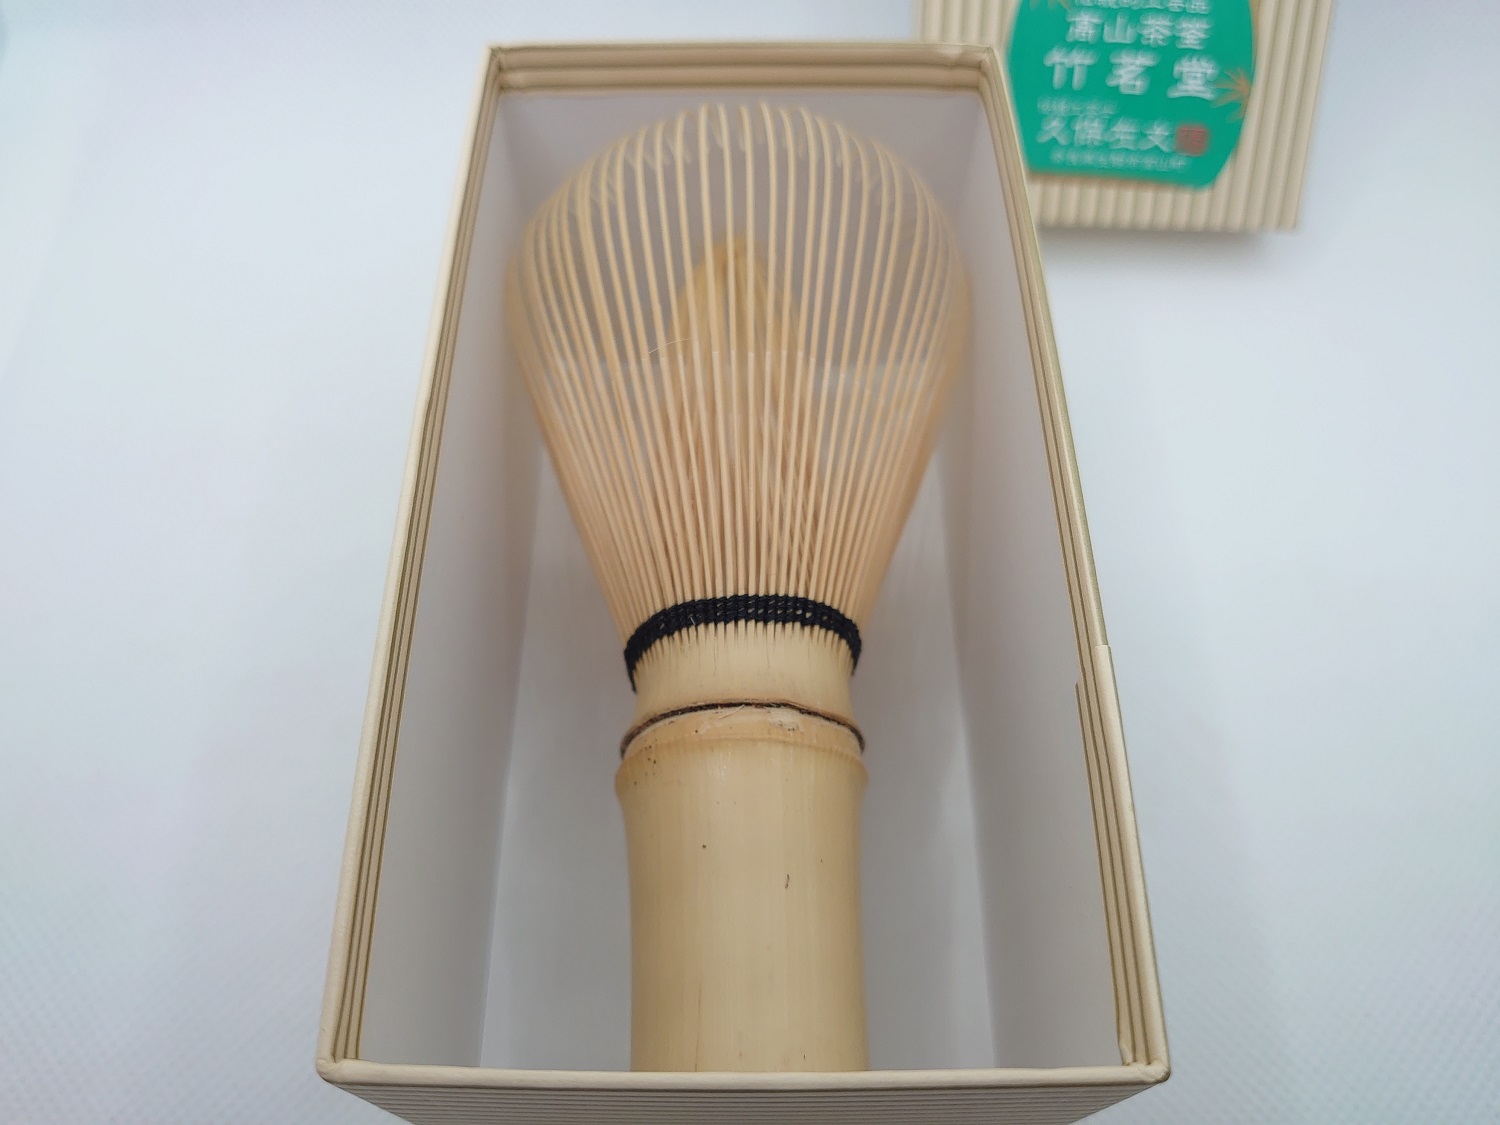 Japanese Bamboo Matcha Whisk for Organic Matcha